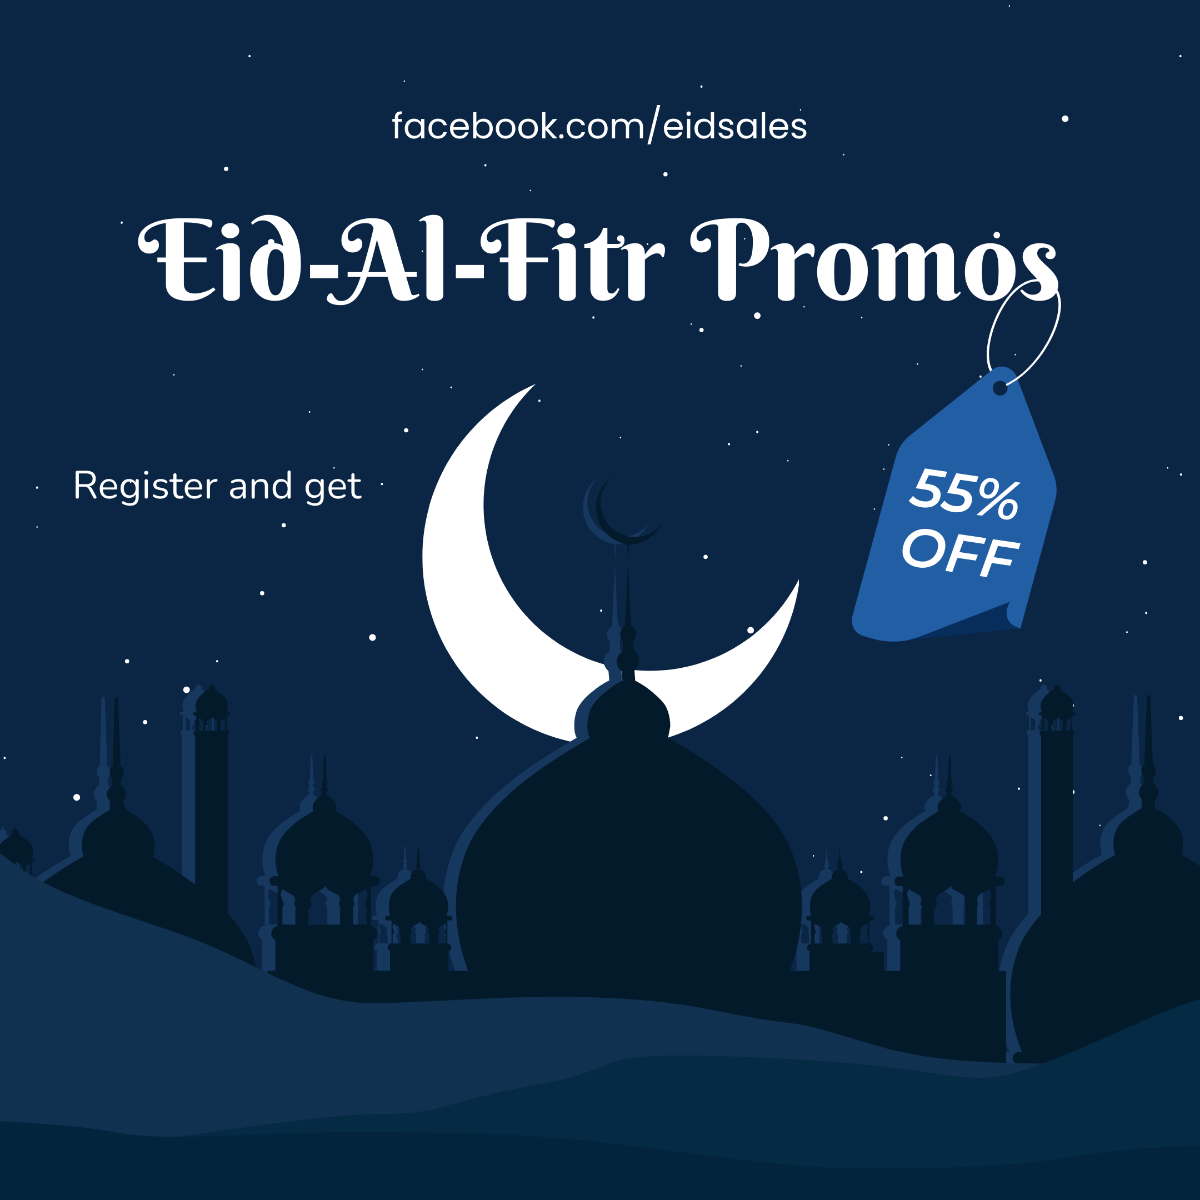 Eid al-Fitr Facebook Ad Banner Template